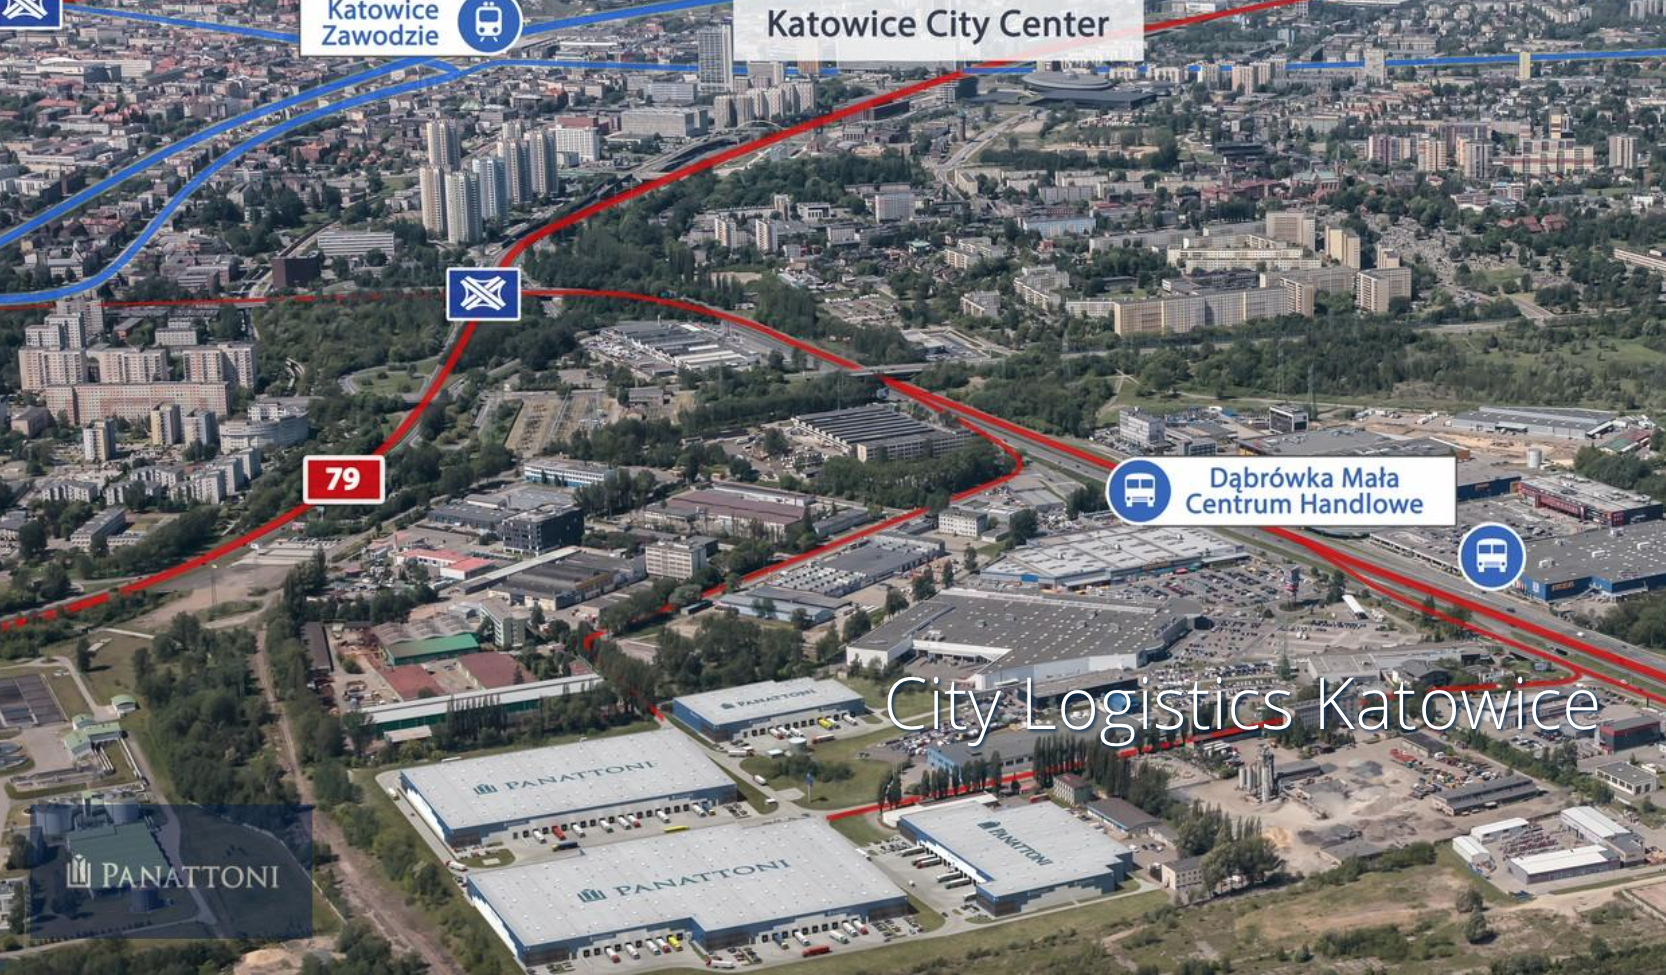 City Logistics Katowice